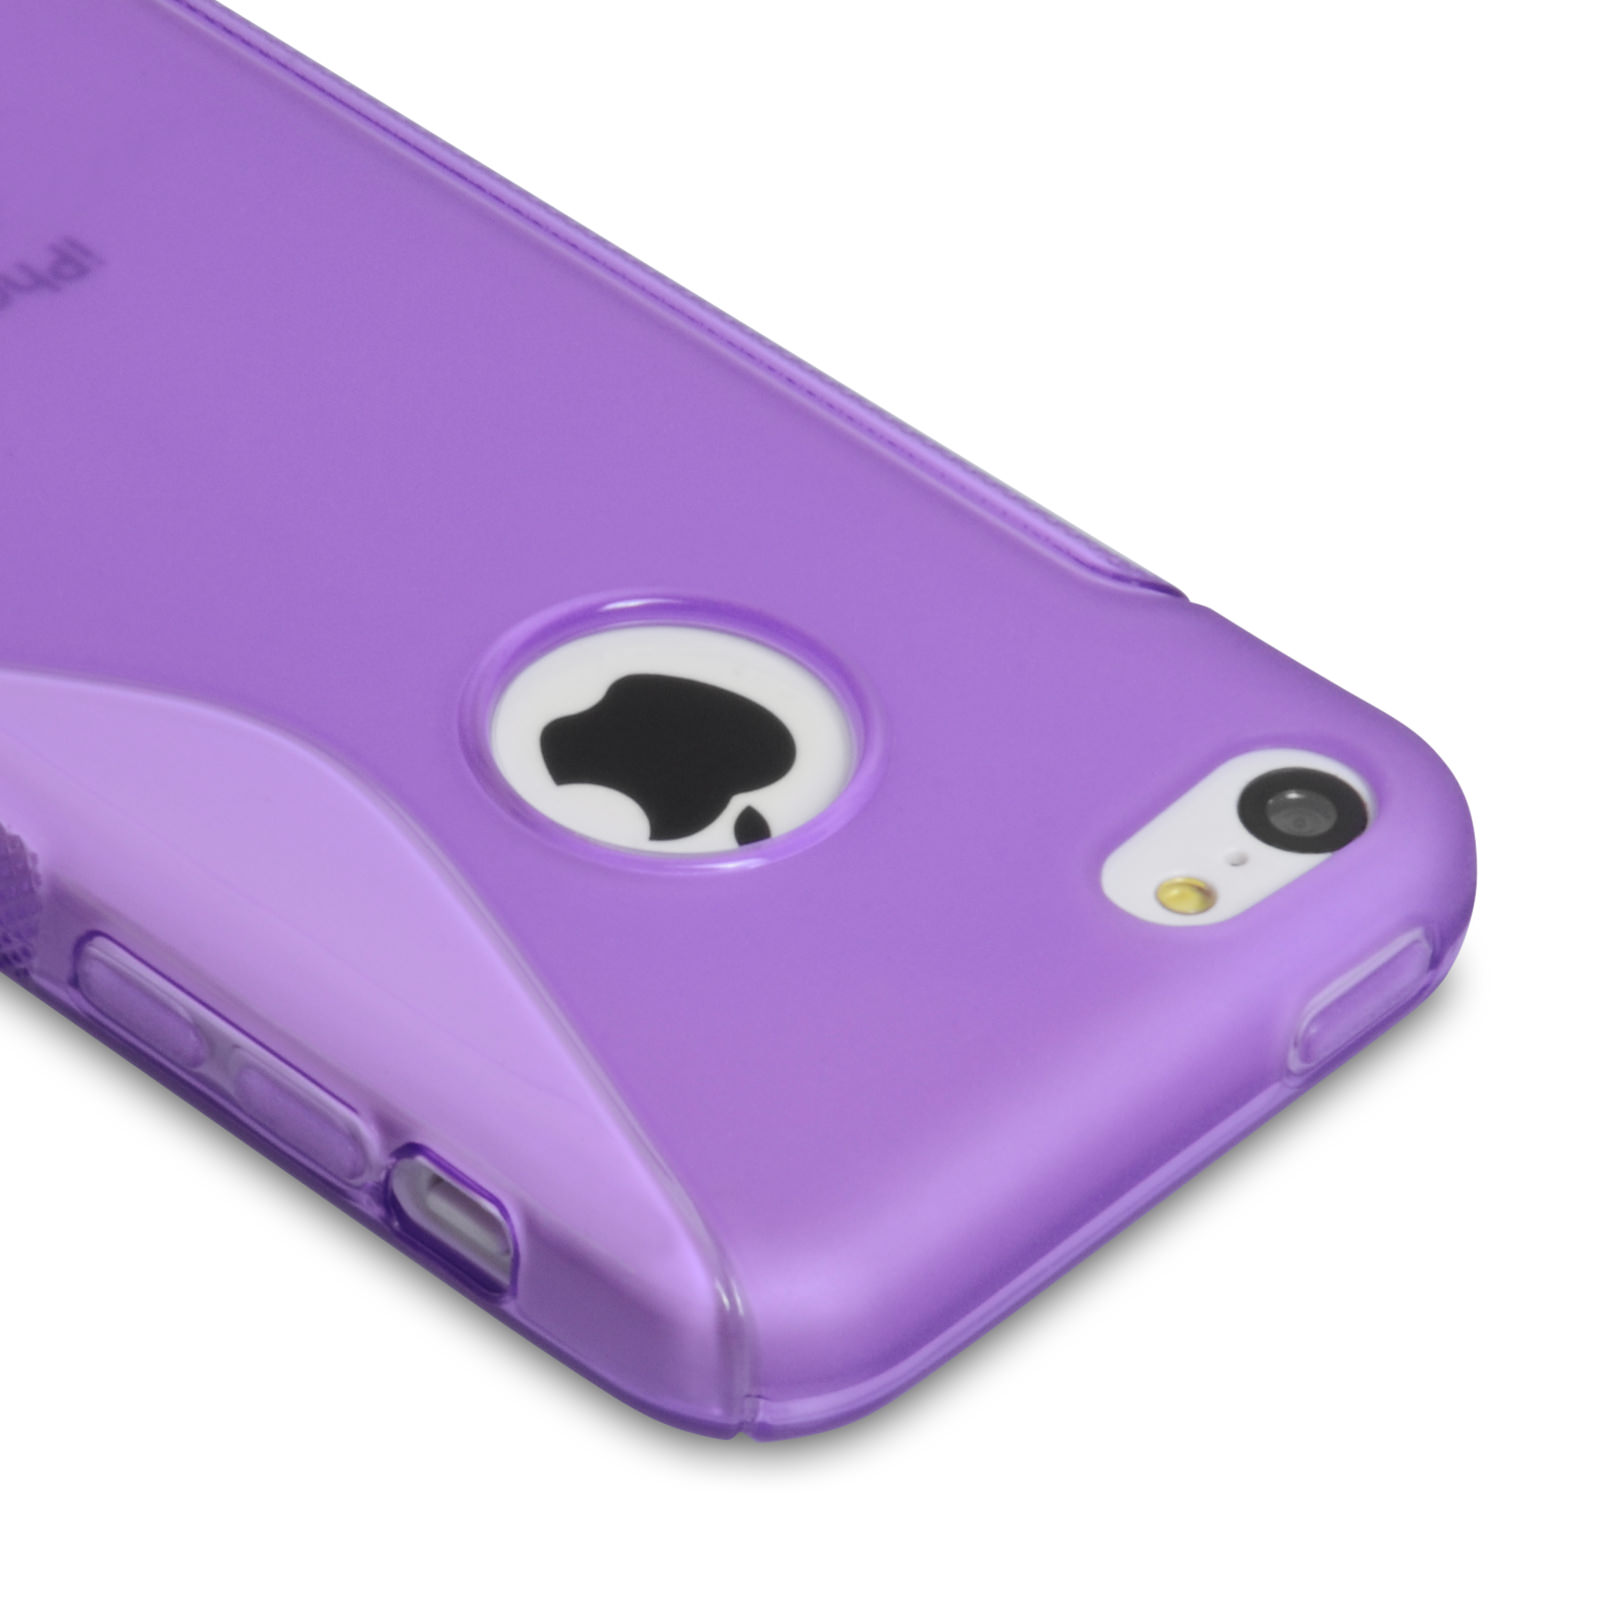 Caseflex iPhone 5c Silicone Gel S-Line Case - Purple